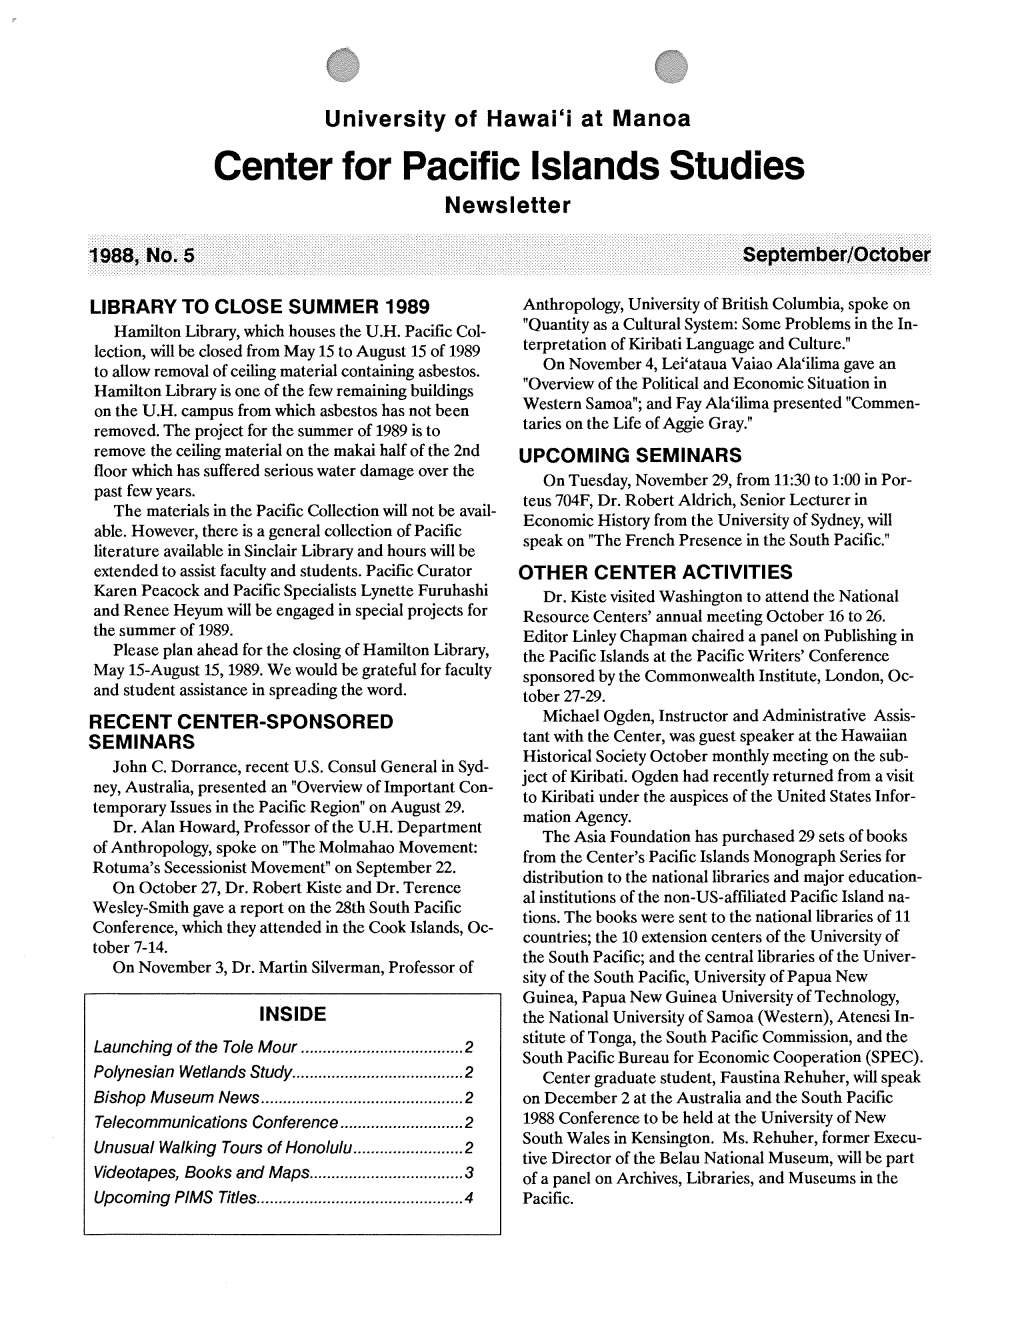 Center for Pacific Islands Studies Newsletter